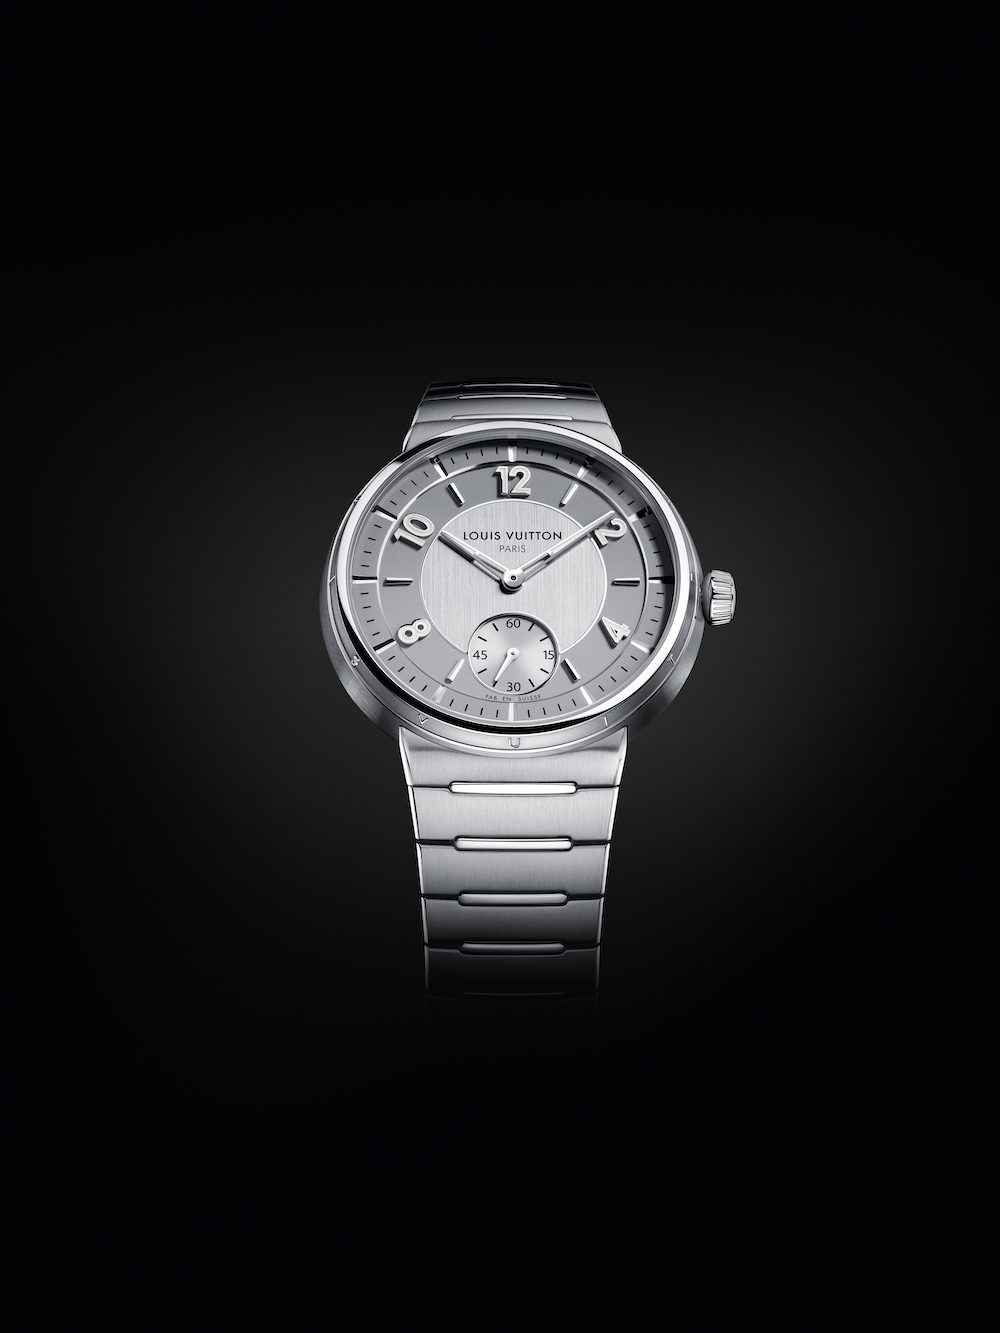 Louis Vuitton unveils new Tambour watch